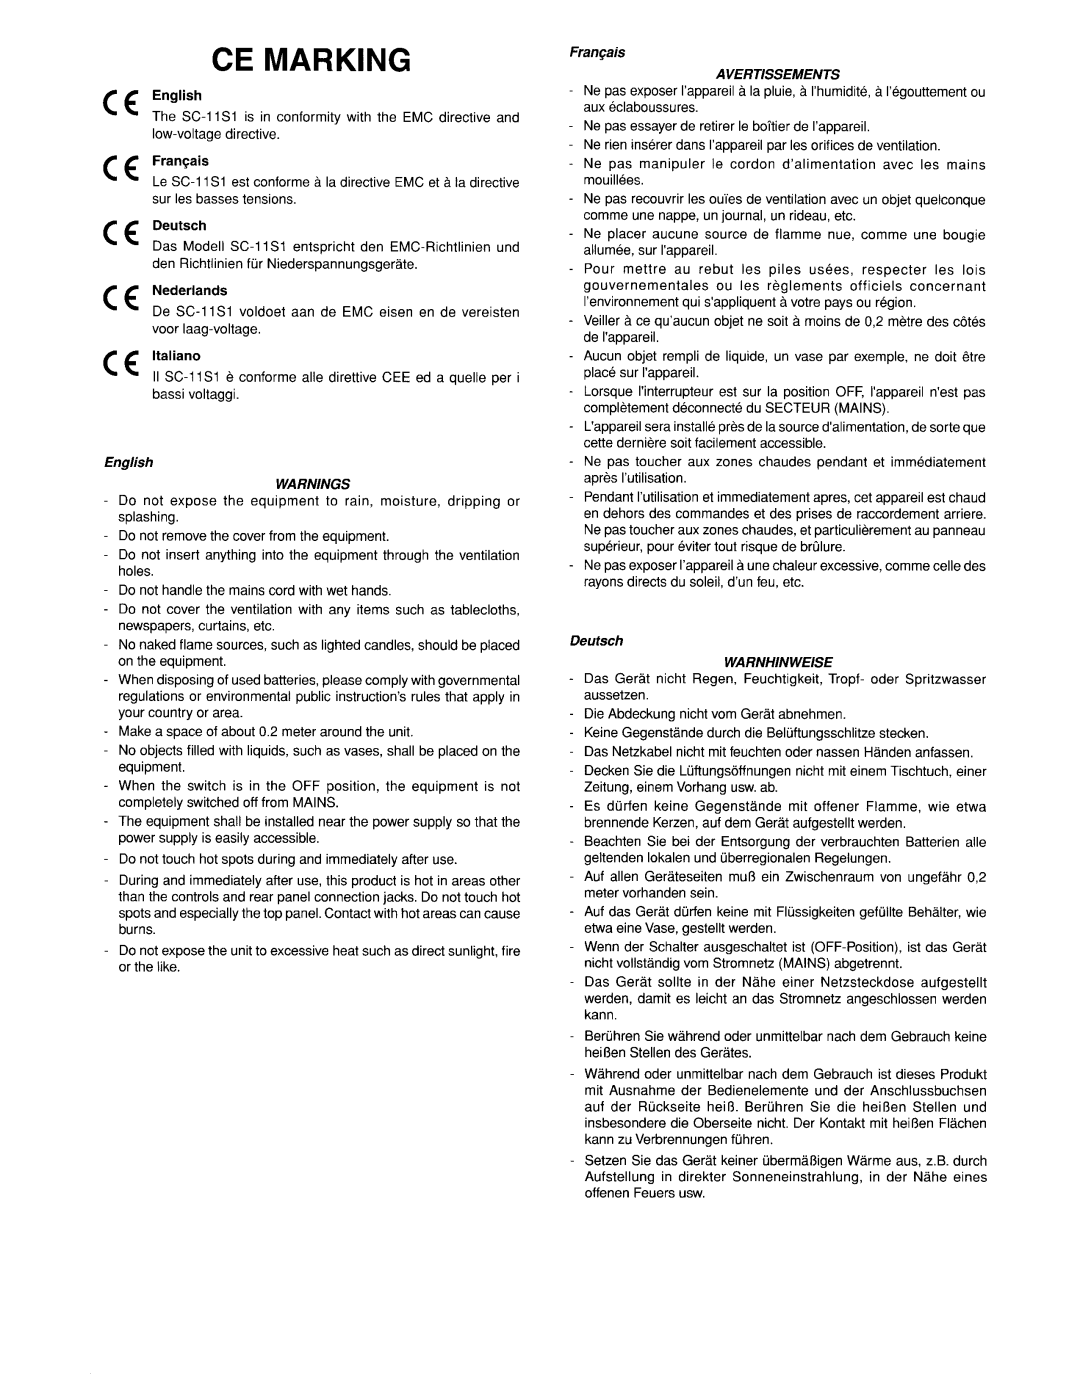 Marantz SC-11S1 manual Ce Marking, Warnings, Frangais AVERTISSEMENTS, Warnhinweise, CE English, CE Deutsch, CE: Nederlands 